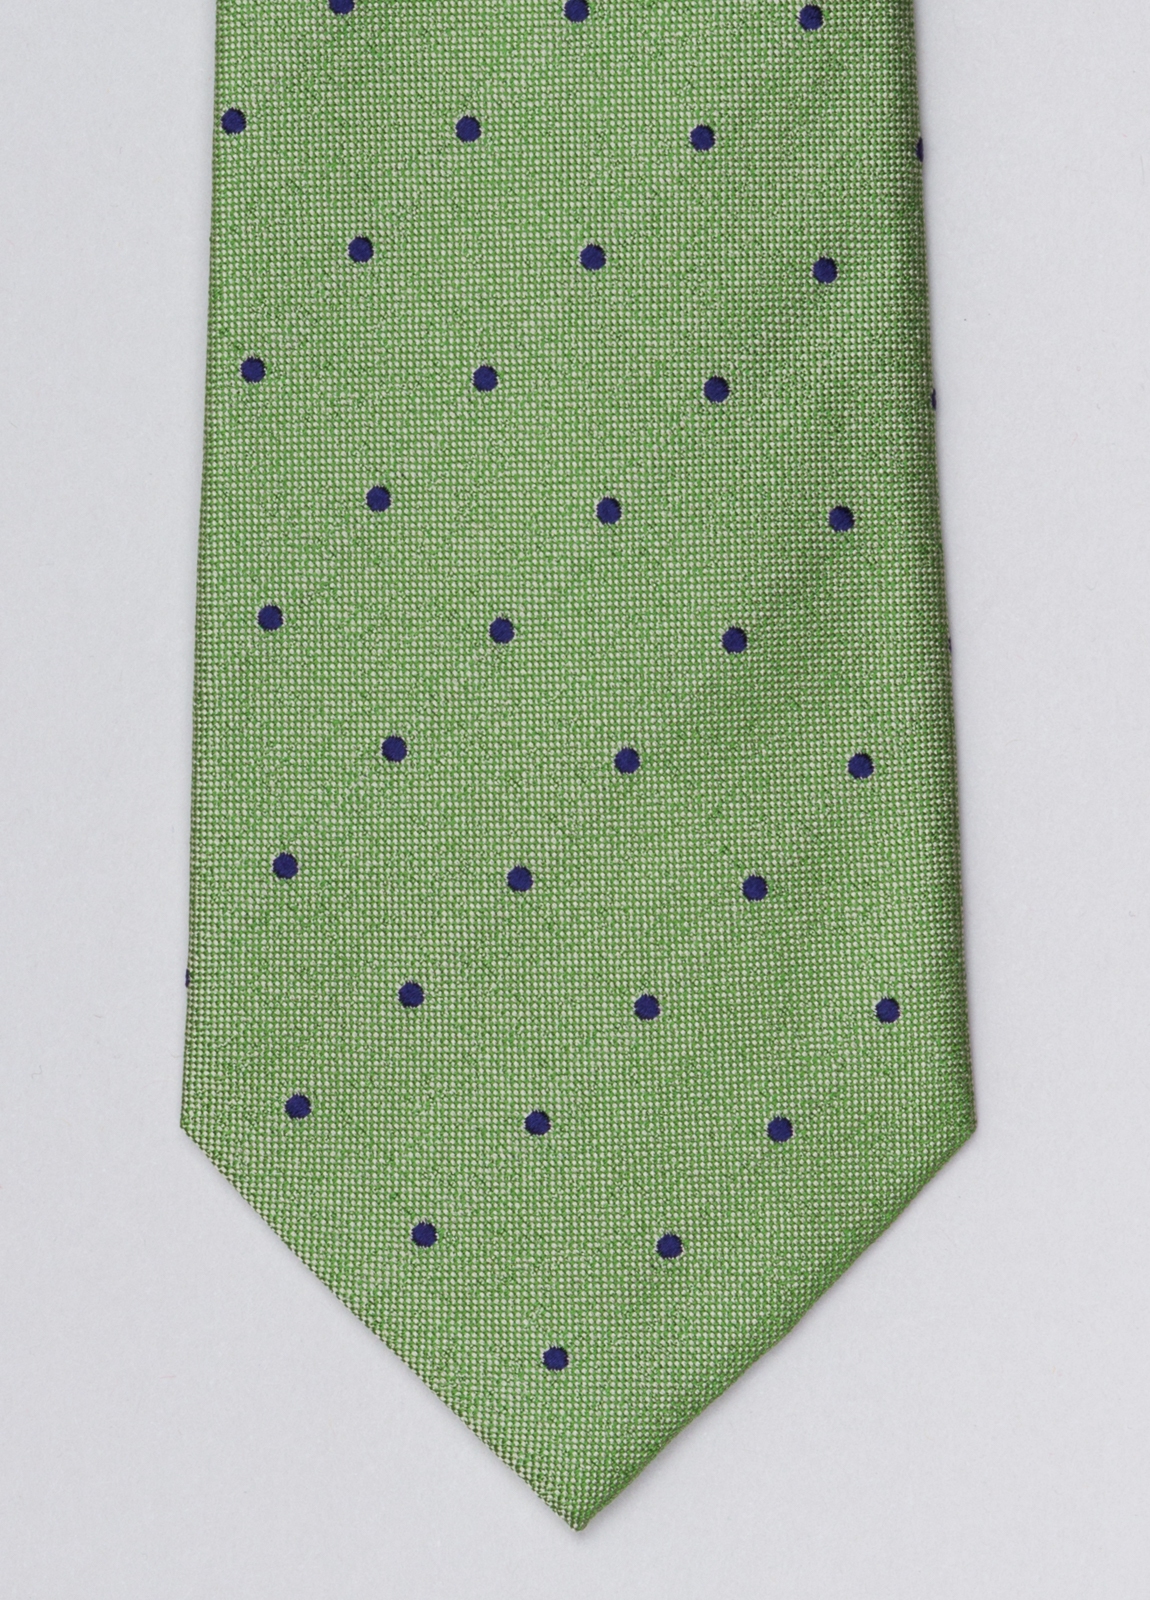 Corbata FUREST COLECCIÓN color verde con topito azul